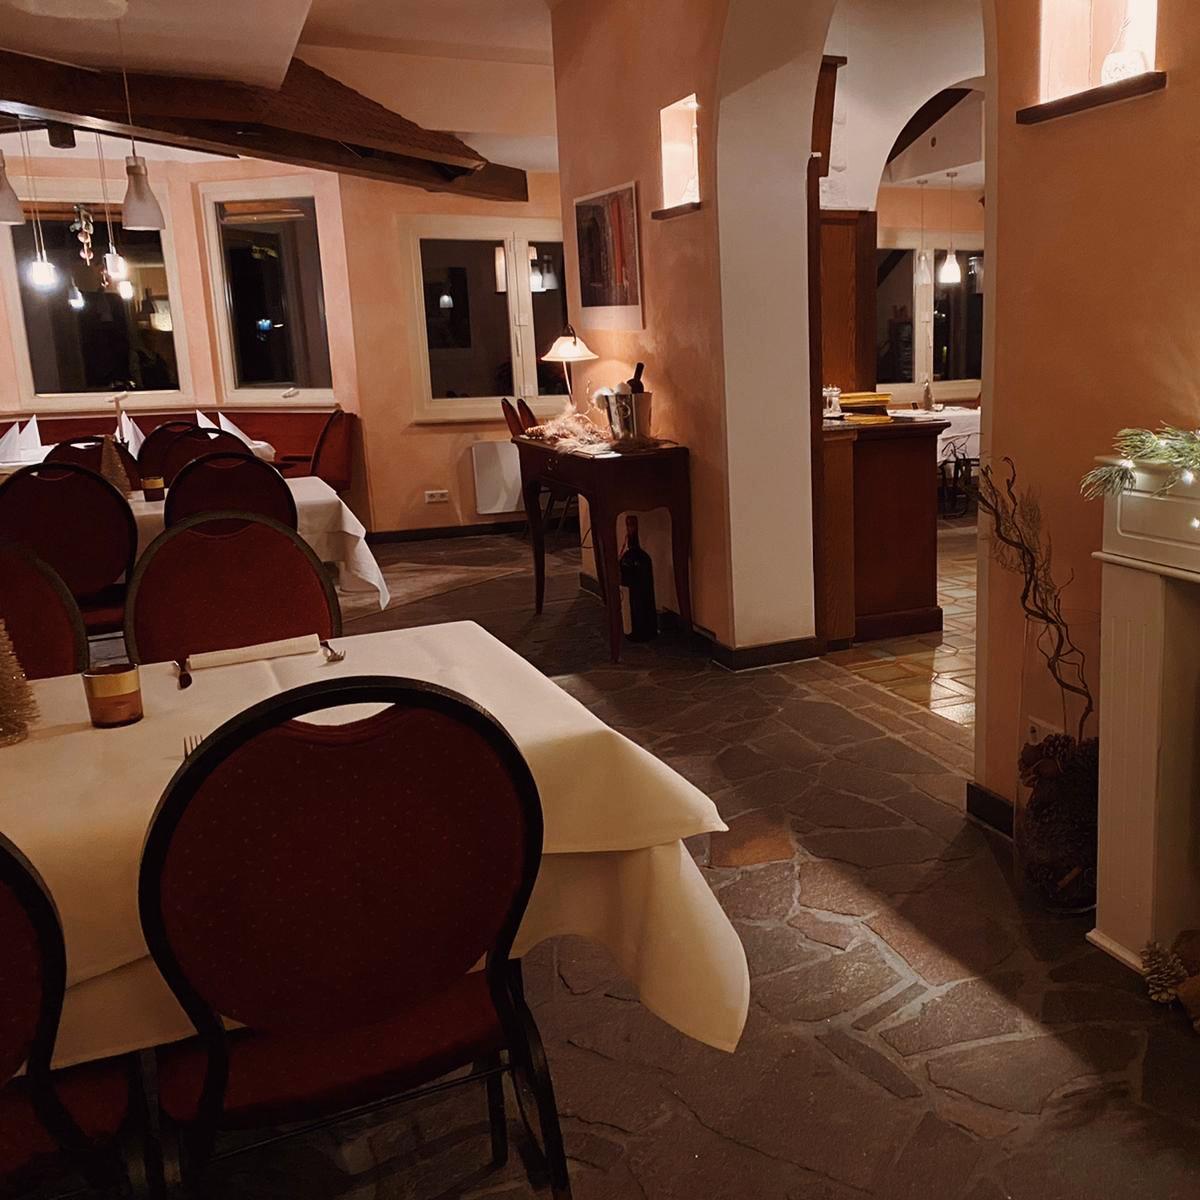 Restaurant "Hinterholz-Stube" in  Schiltach